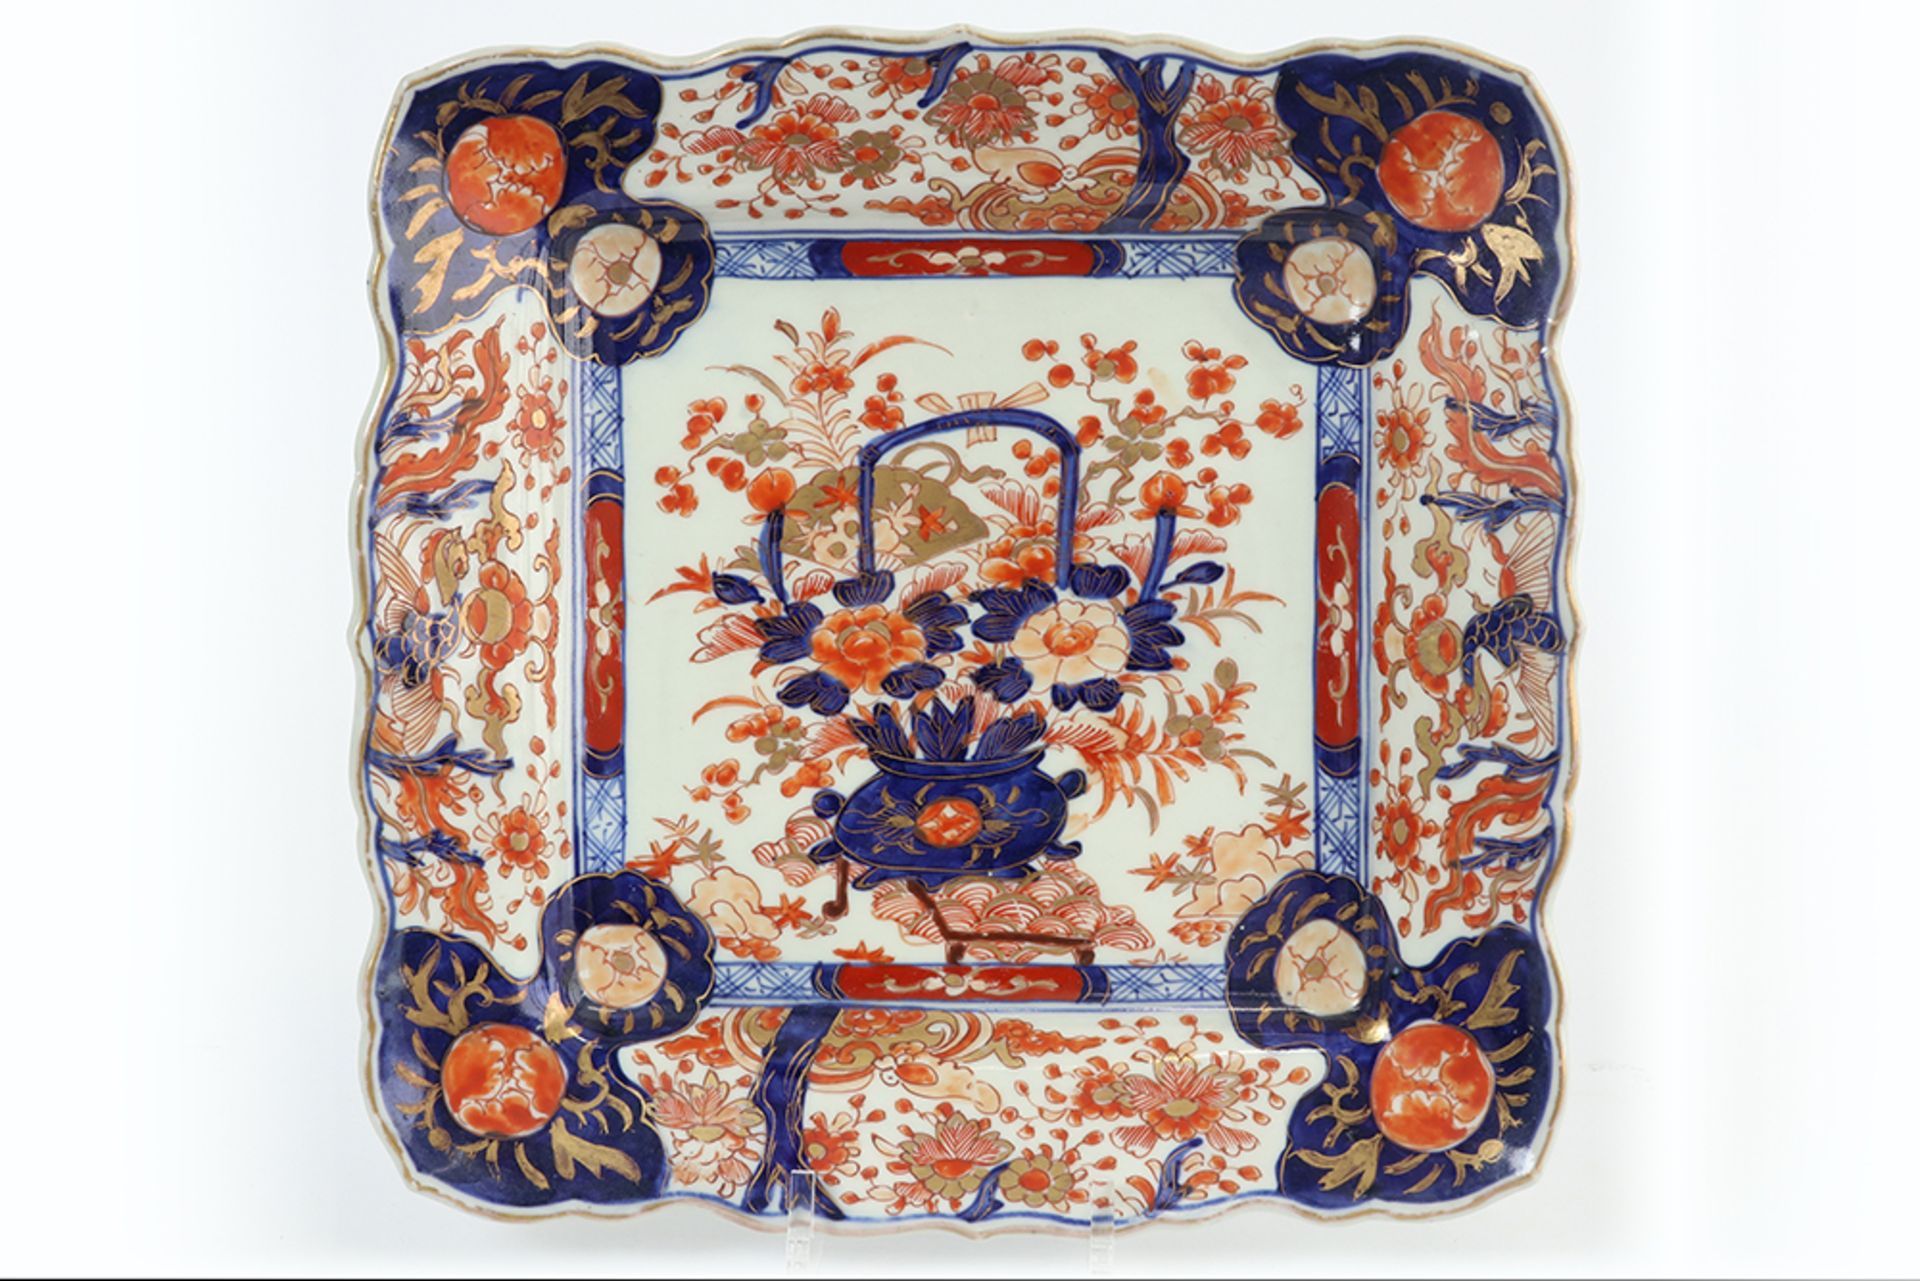 19th Cent. Japanese porcelain square dish || Negentiende eeuwse Japanse vierkante schaal in